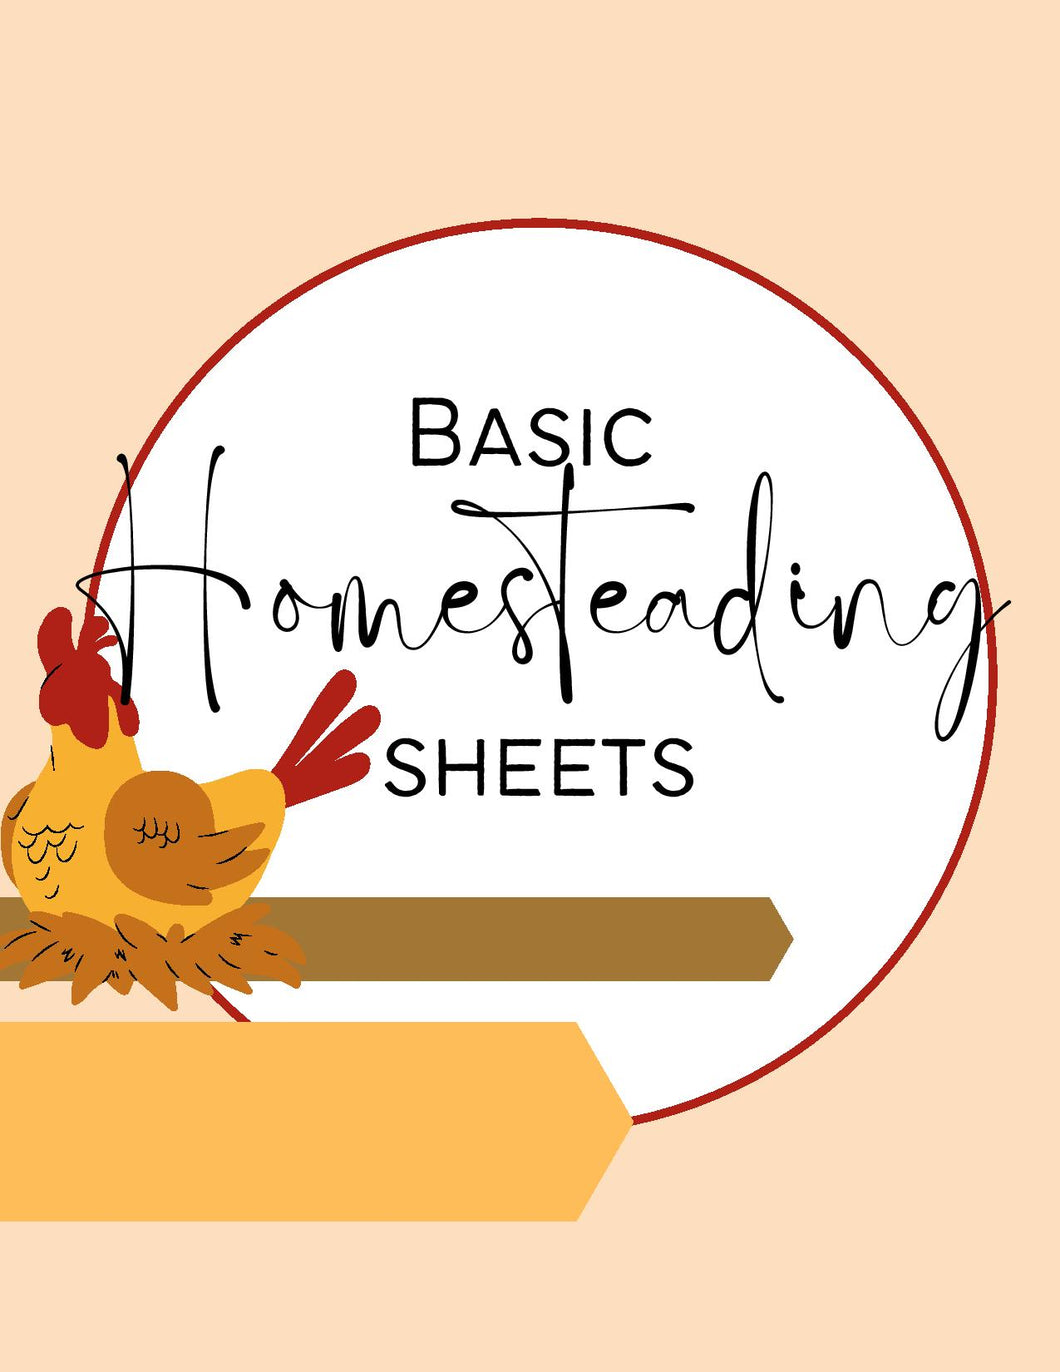 Basic Homesteading Sheets